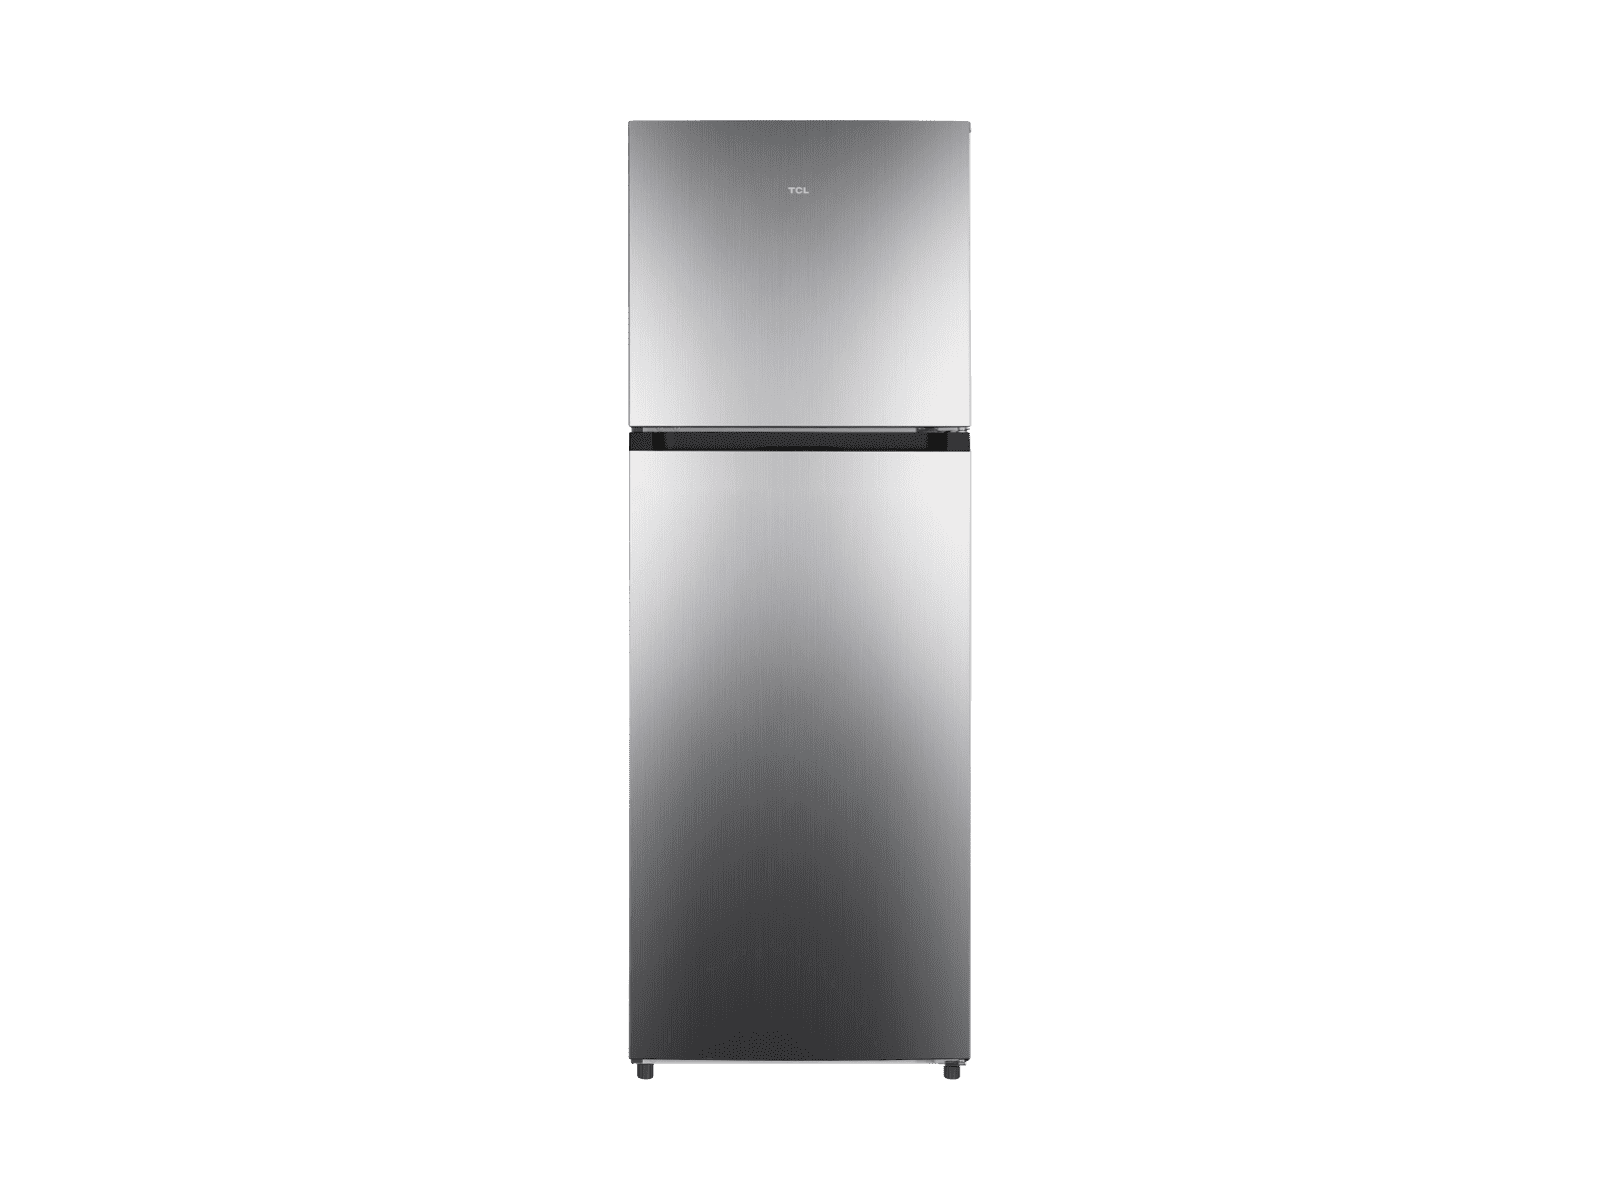 P251TM Top Mounted Refrigerator